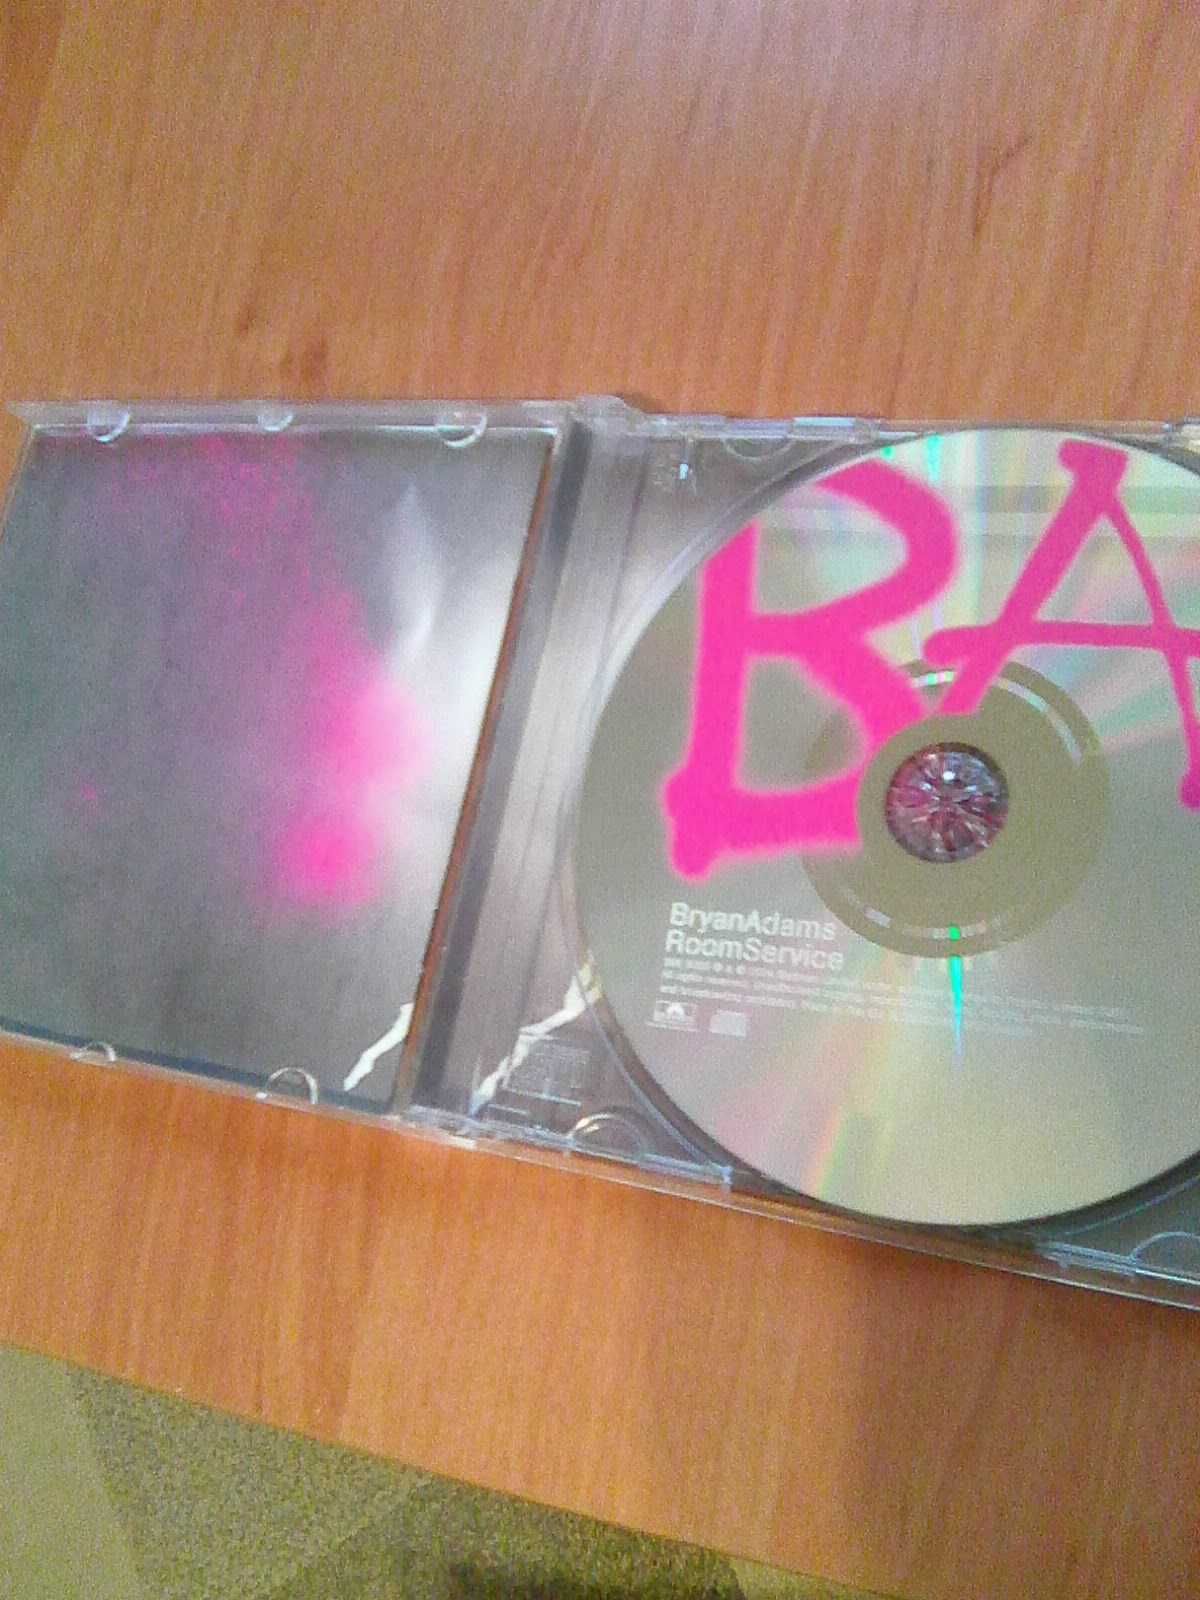 Bryan Adams Room Service CD